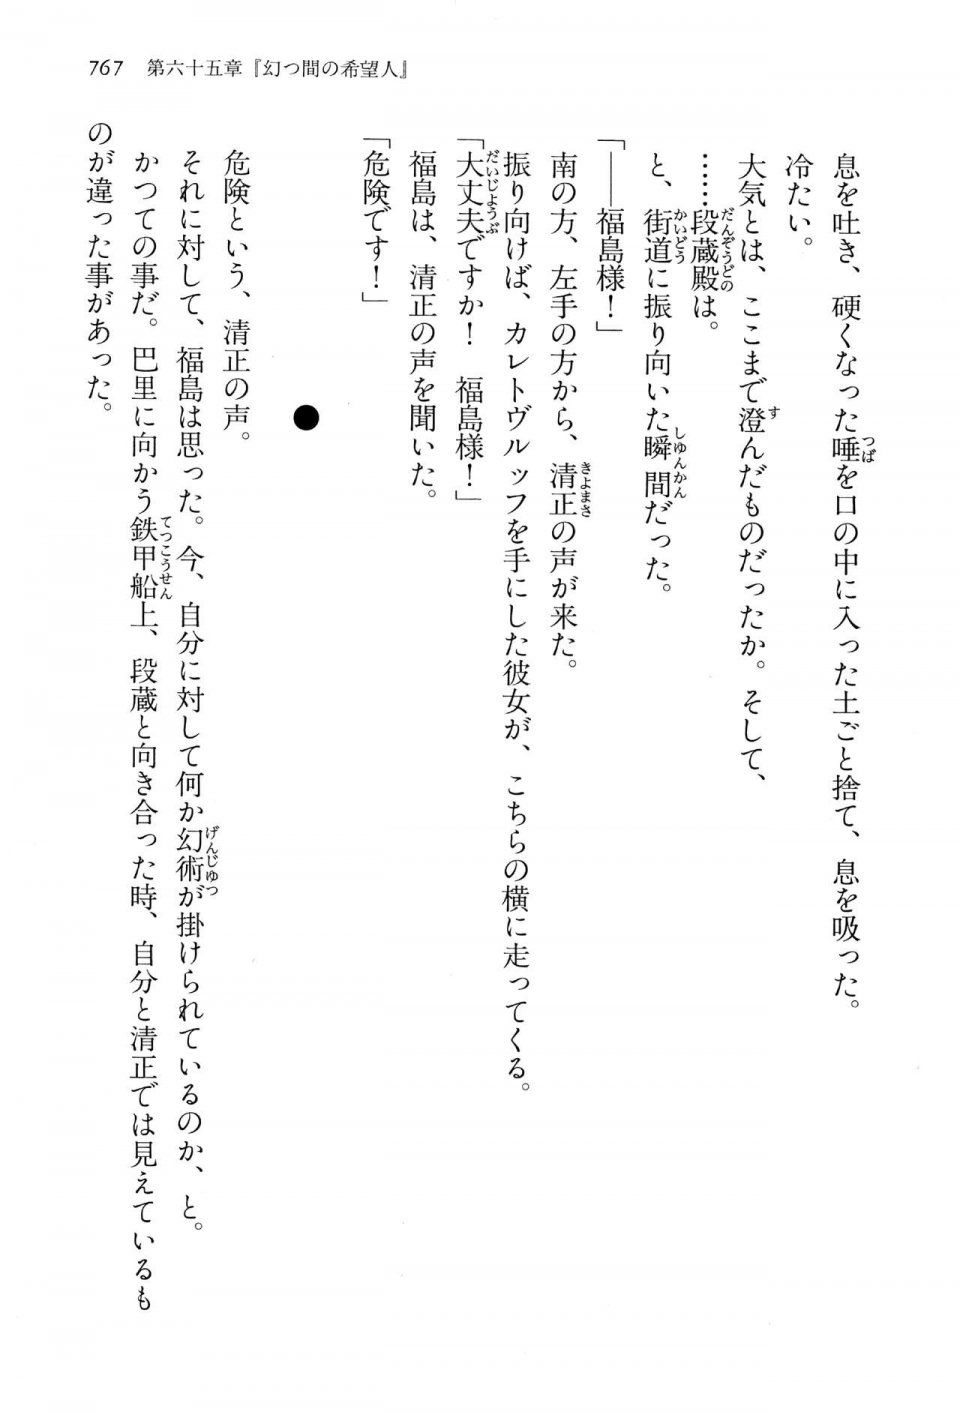 Kyoukai Senjou no Horizon LN Vol 15(6C) Part 2 - Photo #237